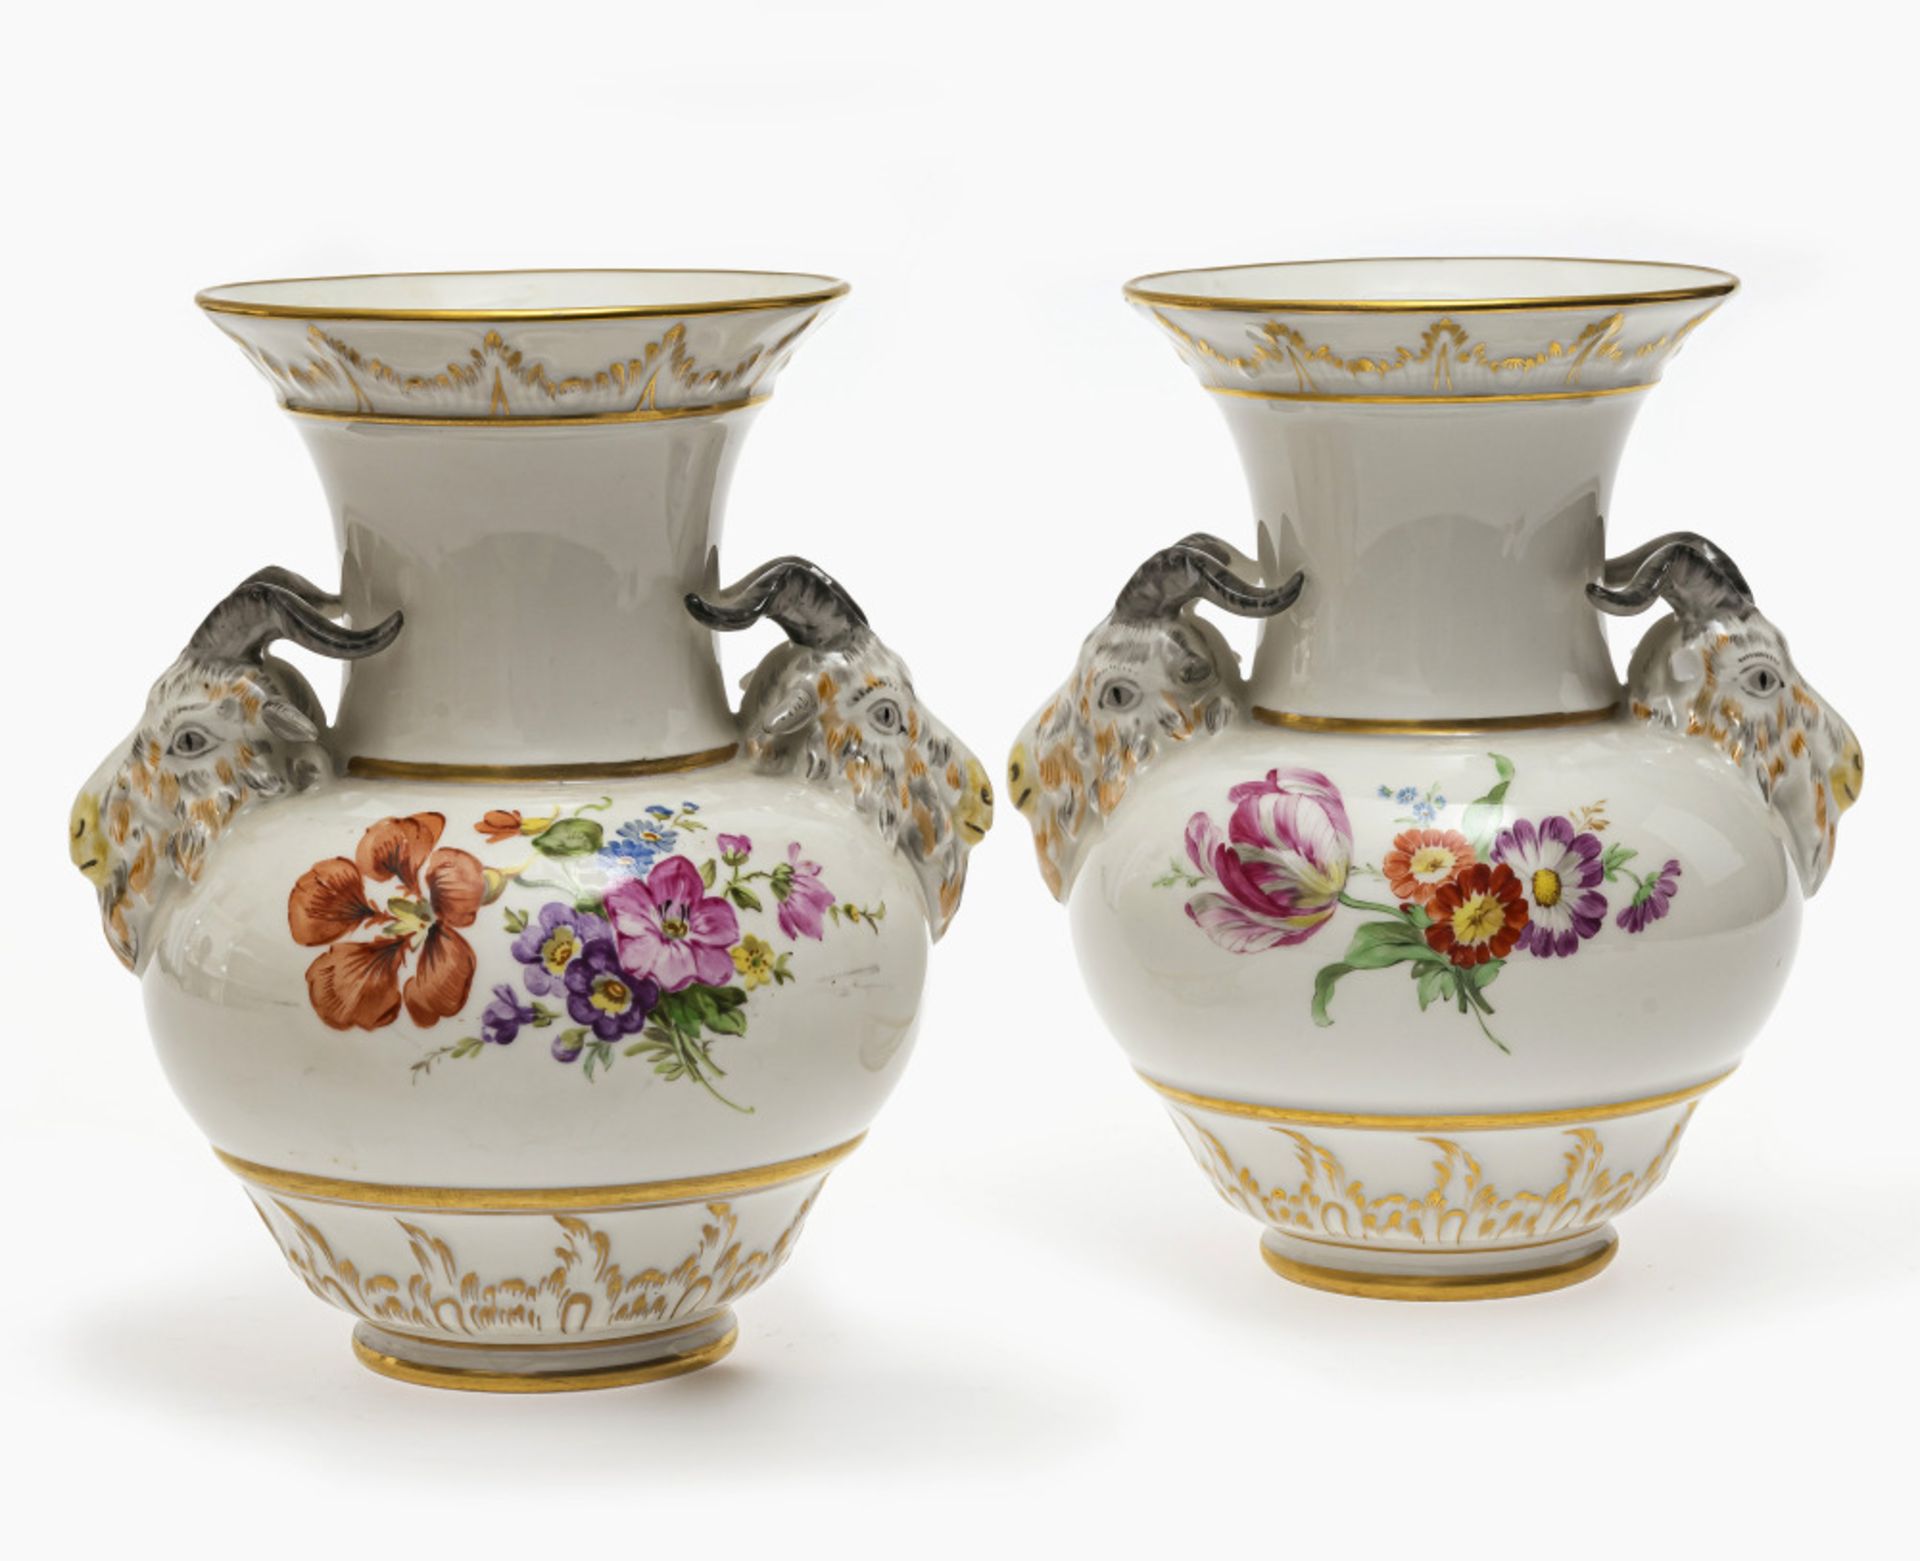 A pair of vases - KPM Berlin